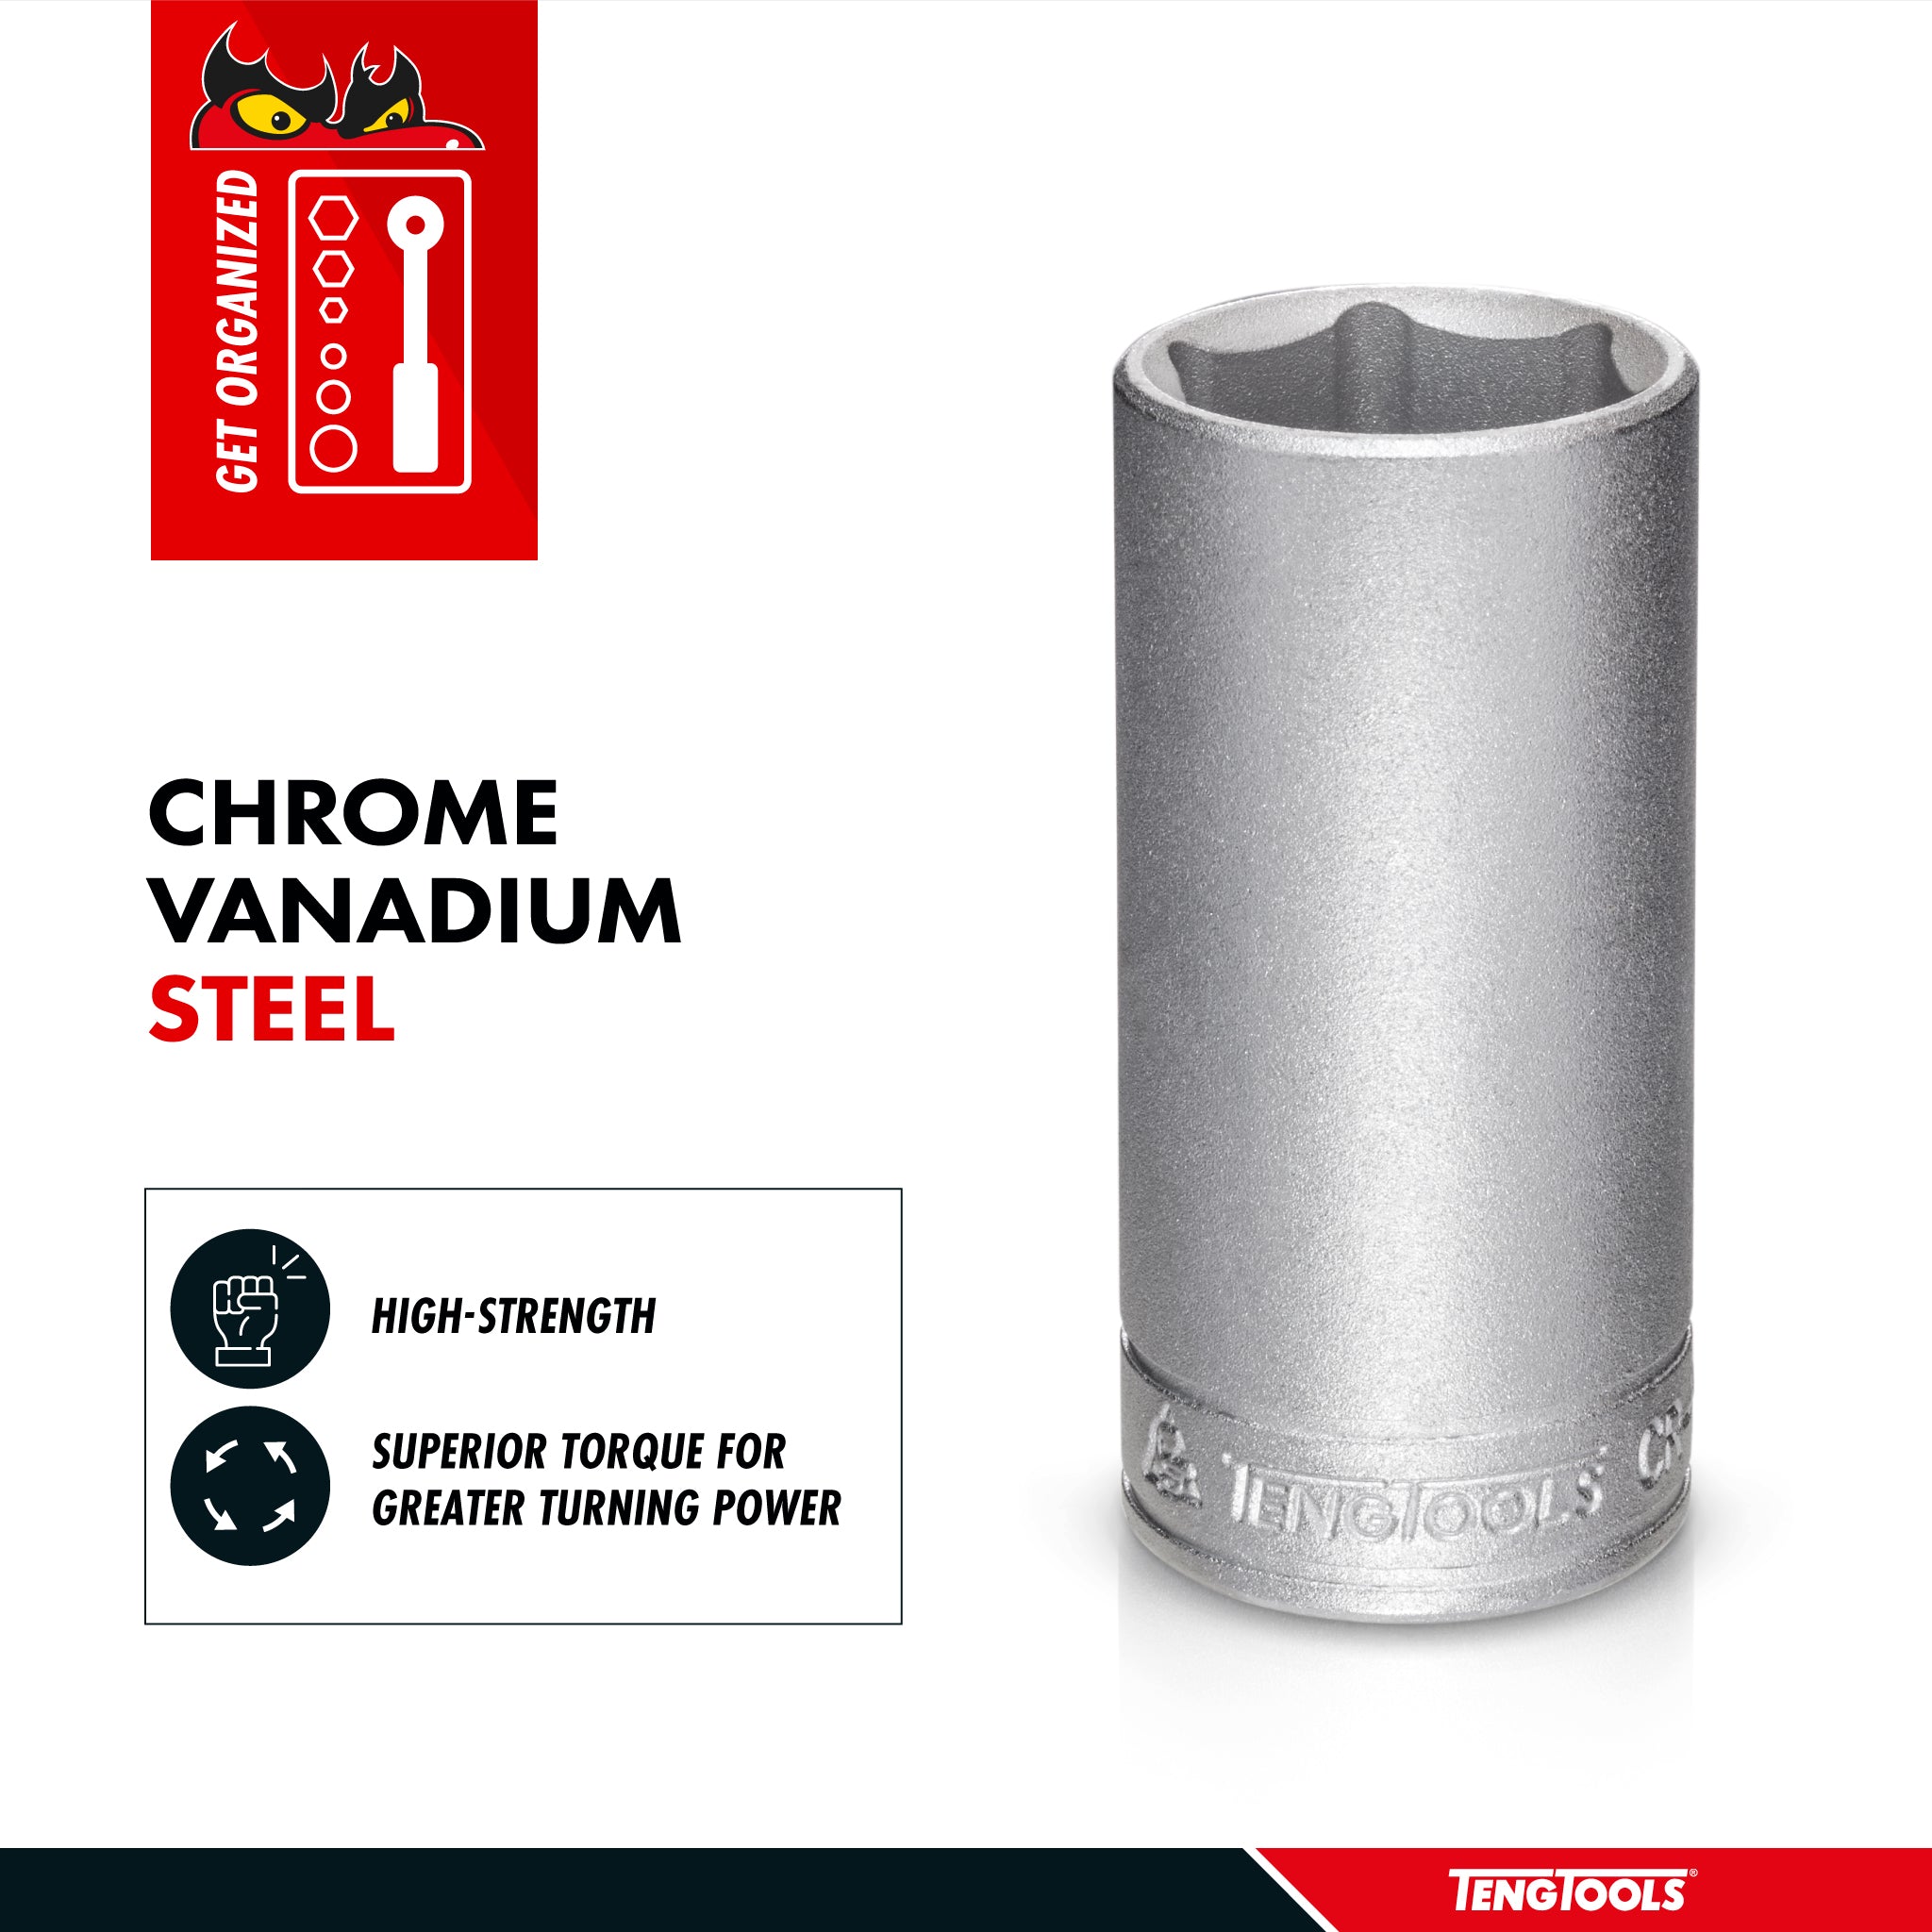 Teng Tools 6 Point SAE Deep 1/4 Inch Drive Chrome Vanadium Sockets - 7/16